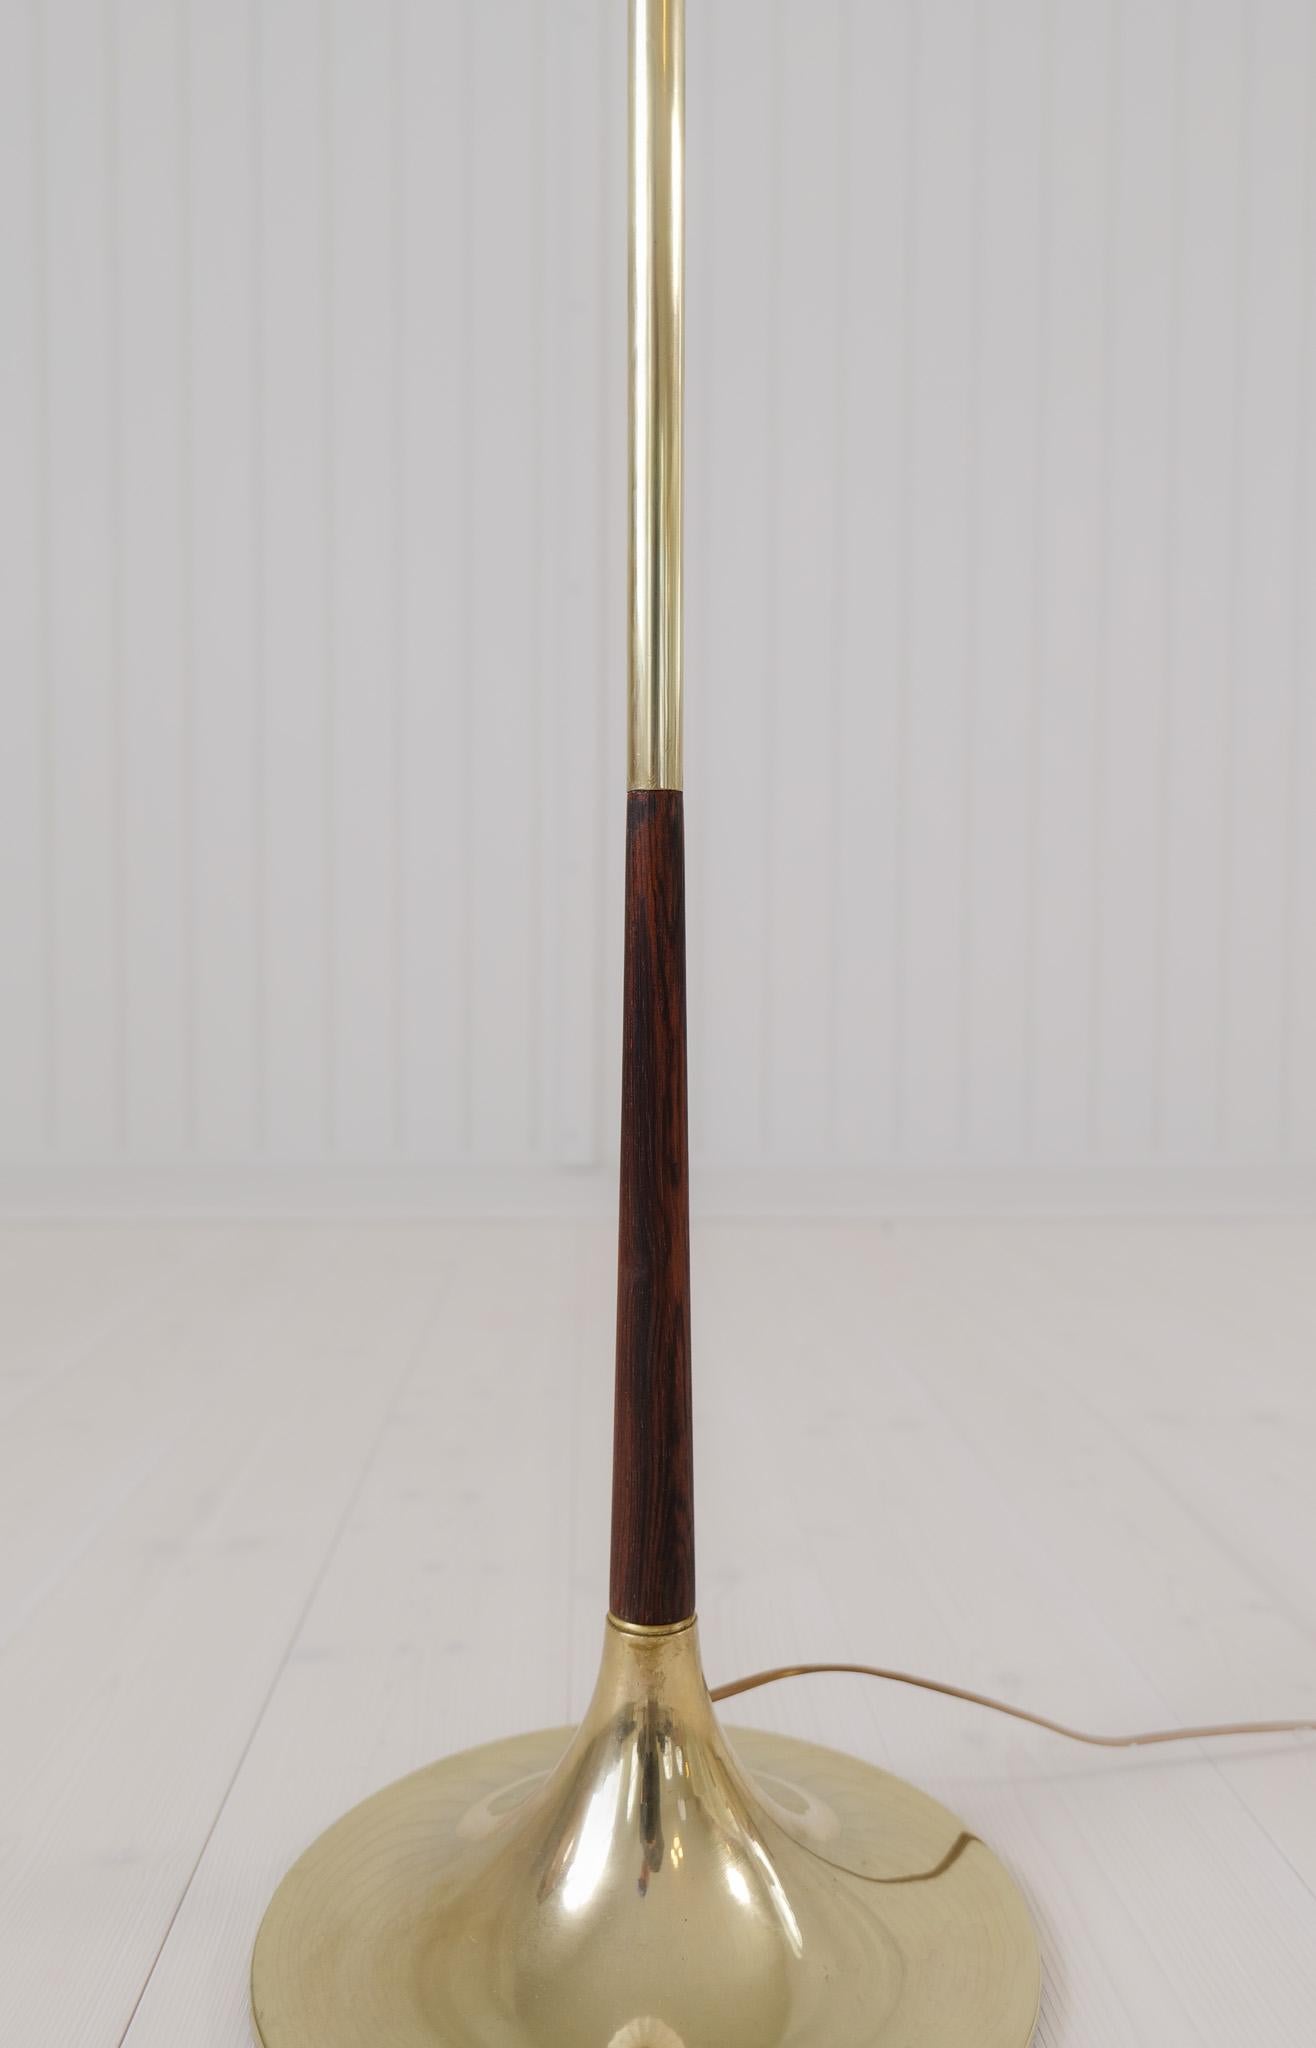 Midcentury Modern Trumpet Shaped Brass Floor Lamp, Sweden, 1960s For Sale 3